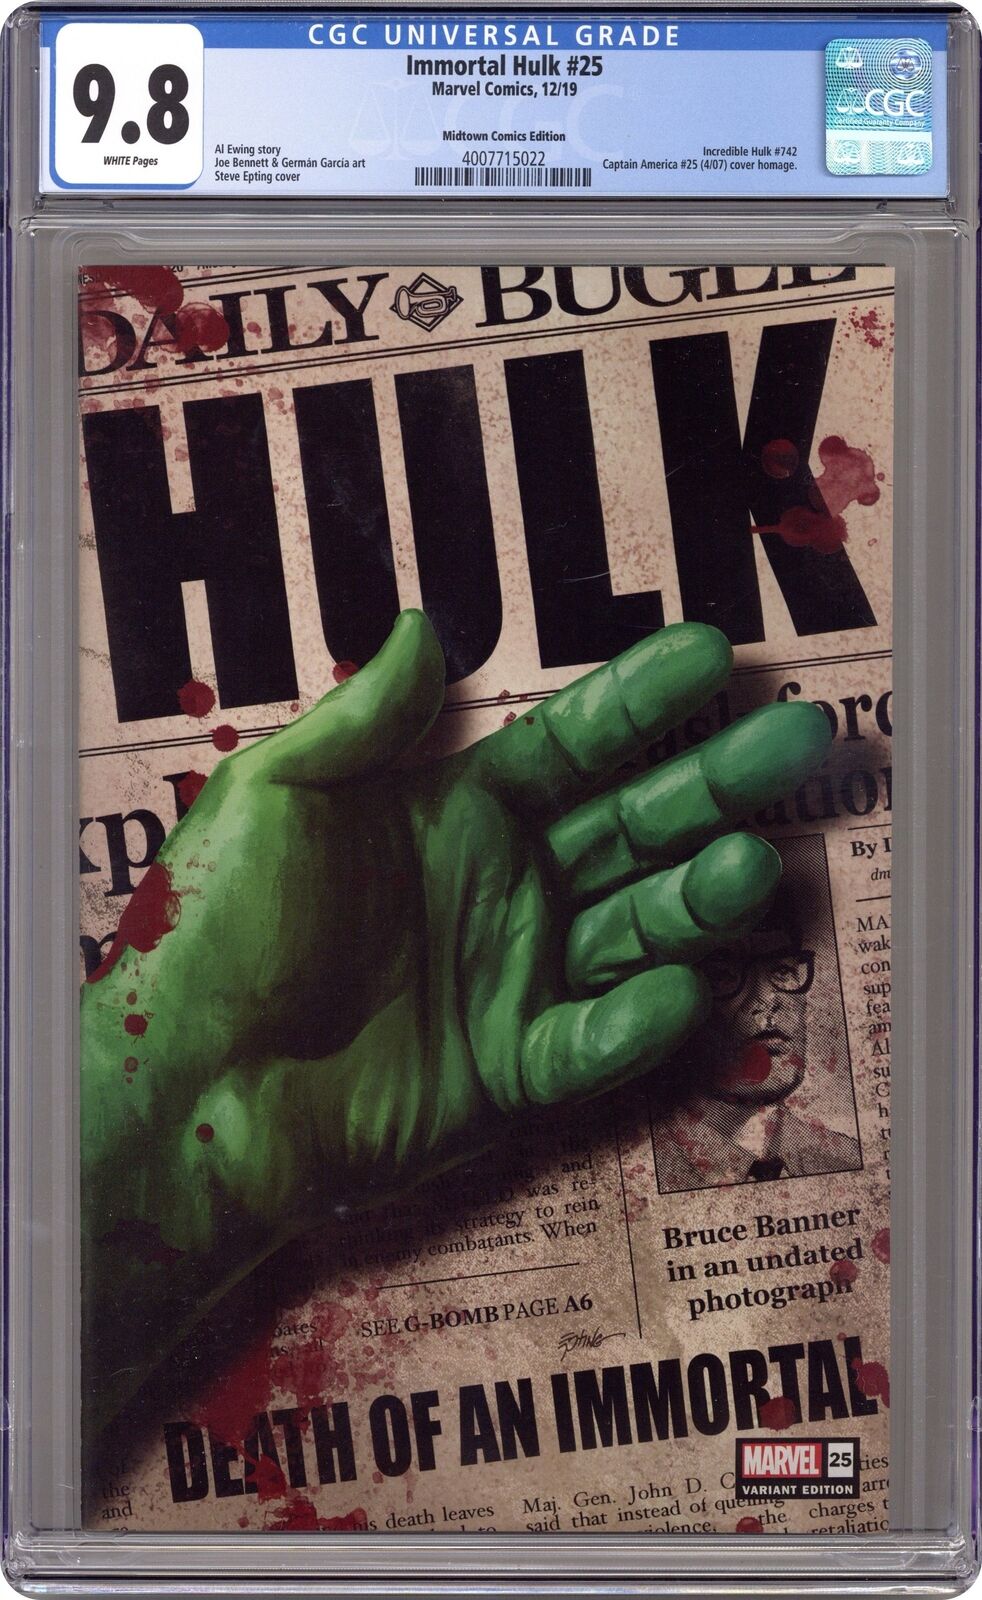 Immortal Hulk #25MIDTOWN CGC 9.8 2019 4007715022